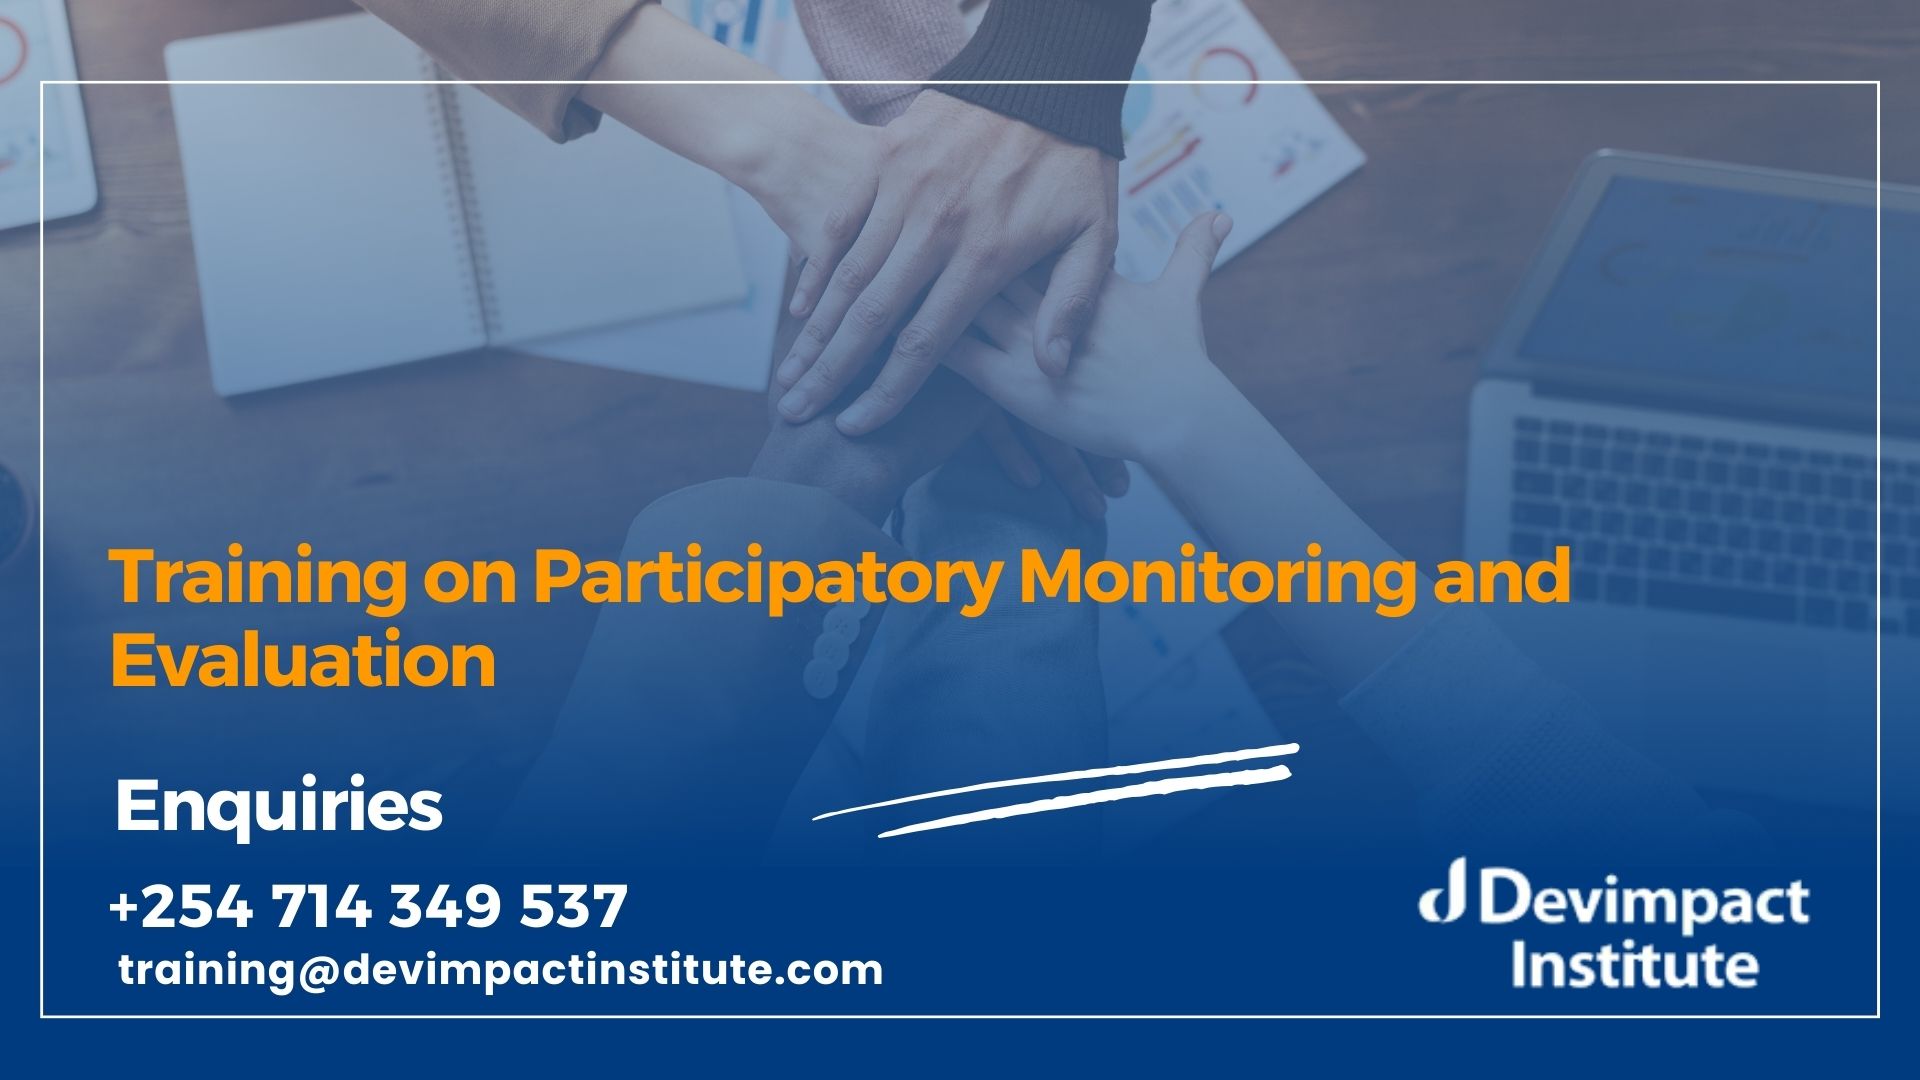 Training on Participatory Monitoring and Evaluation, Devimpact Institute, Nairobi, Kenya